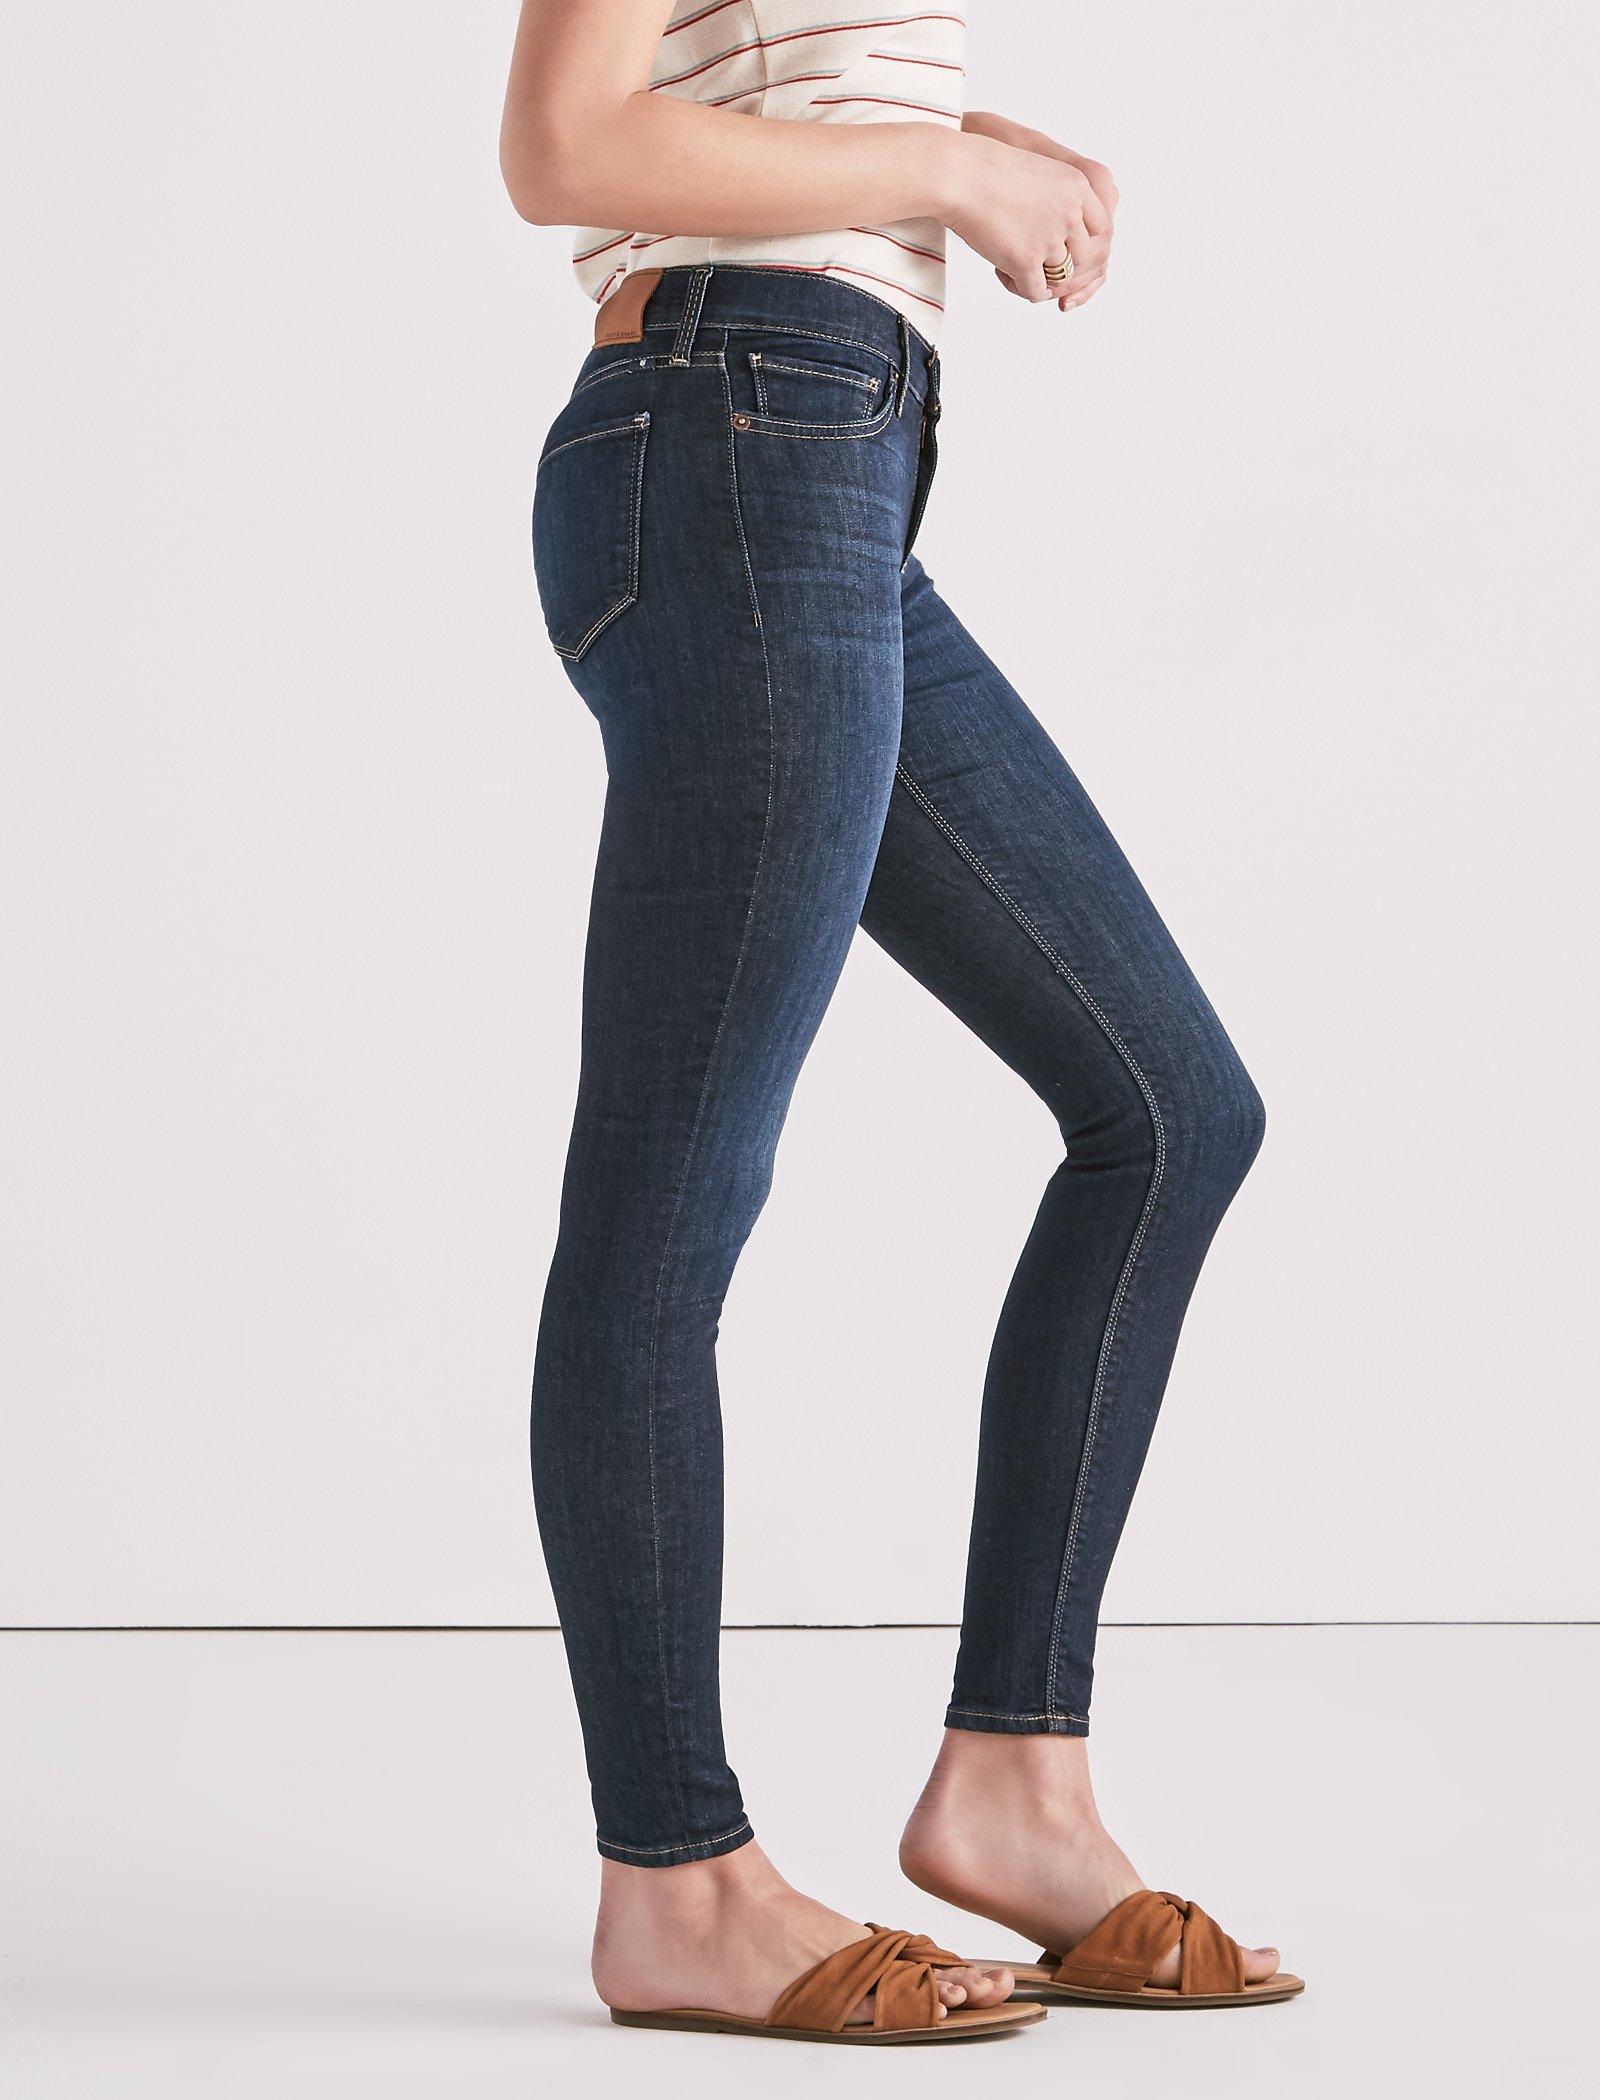 lucky brooke legging jean